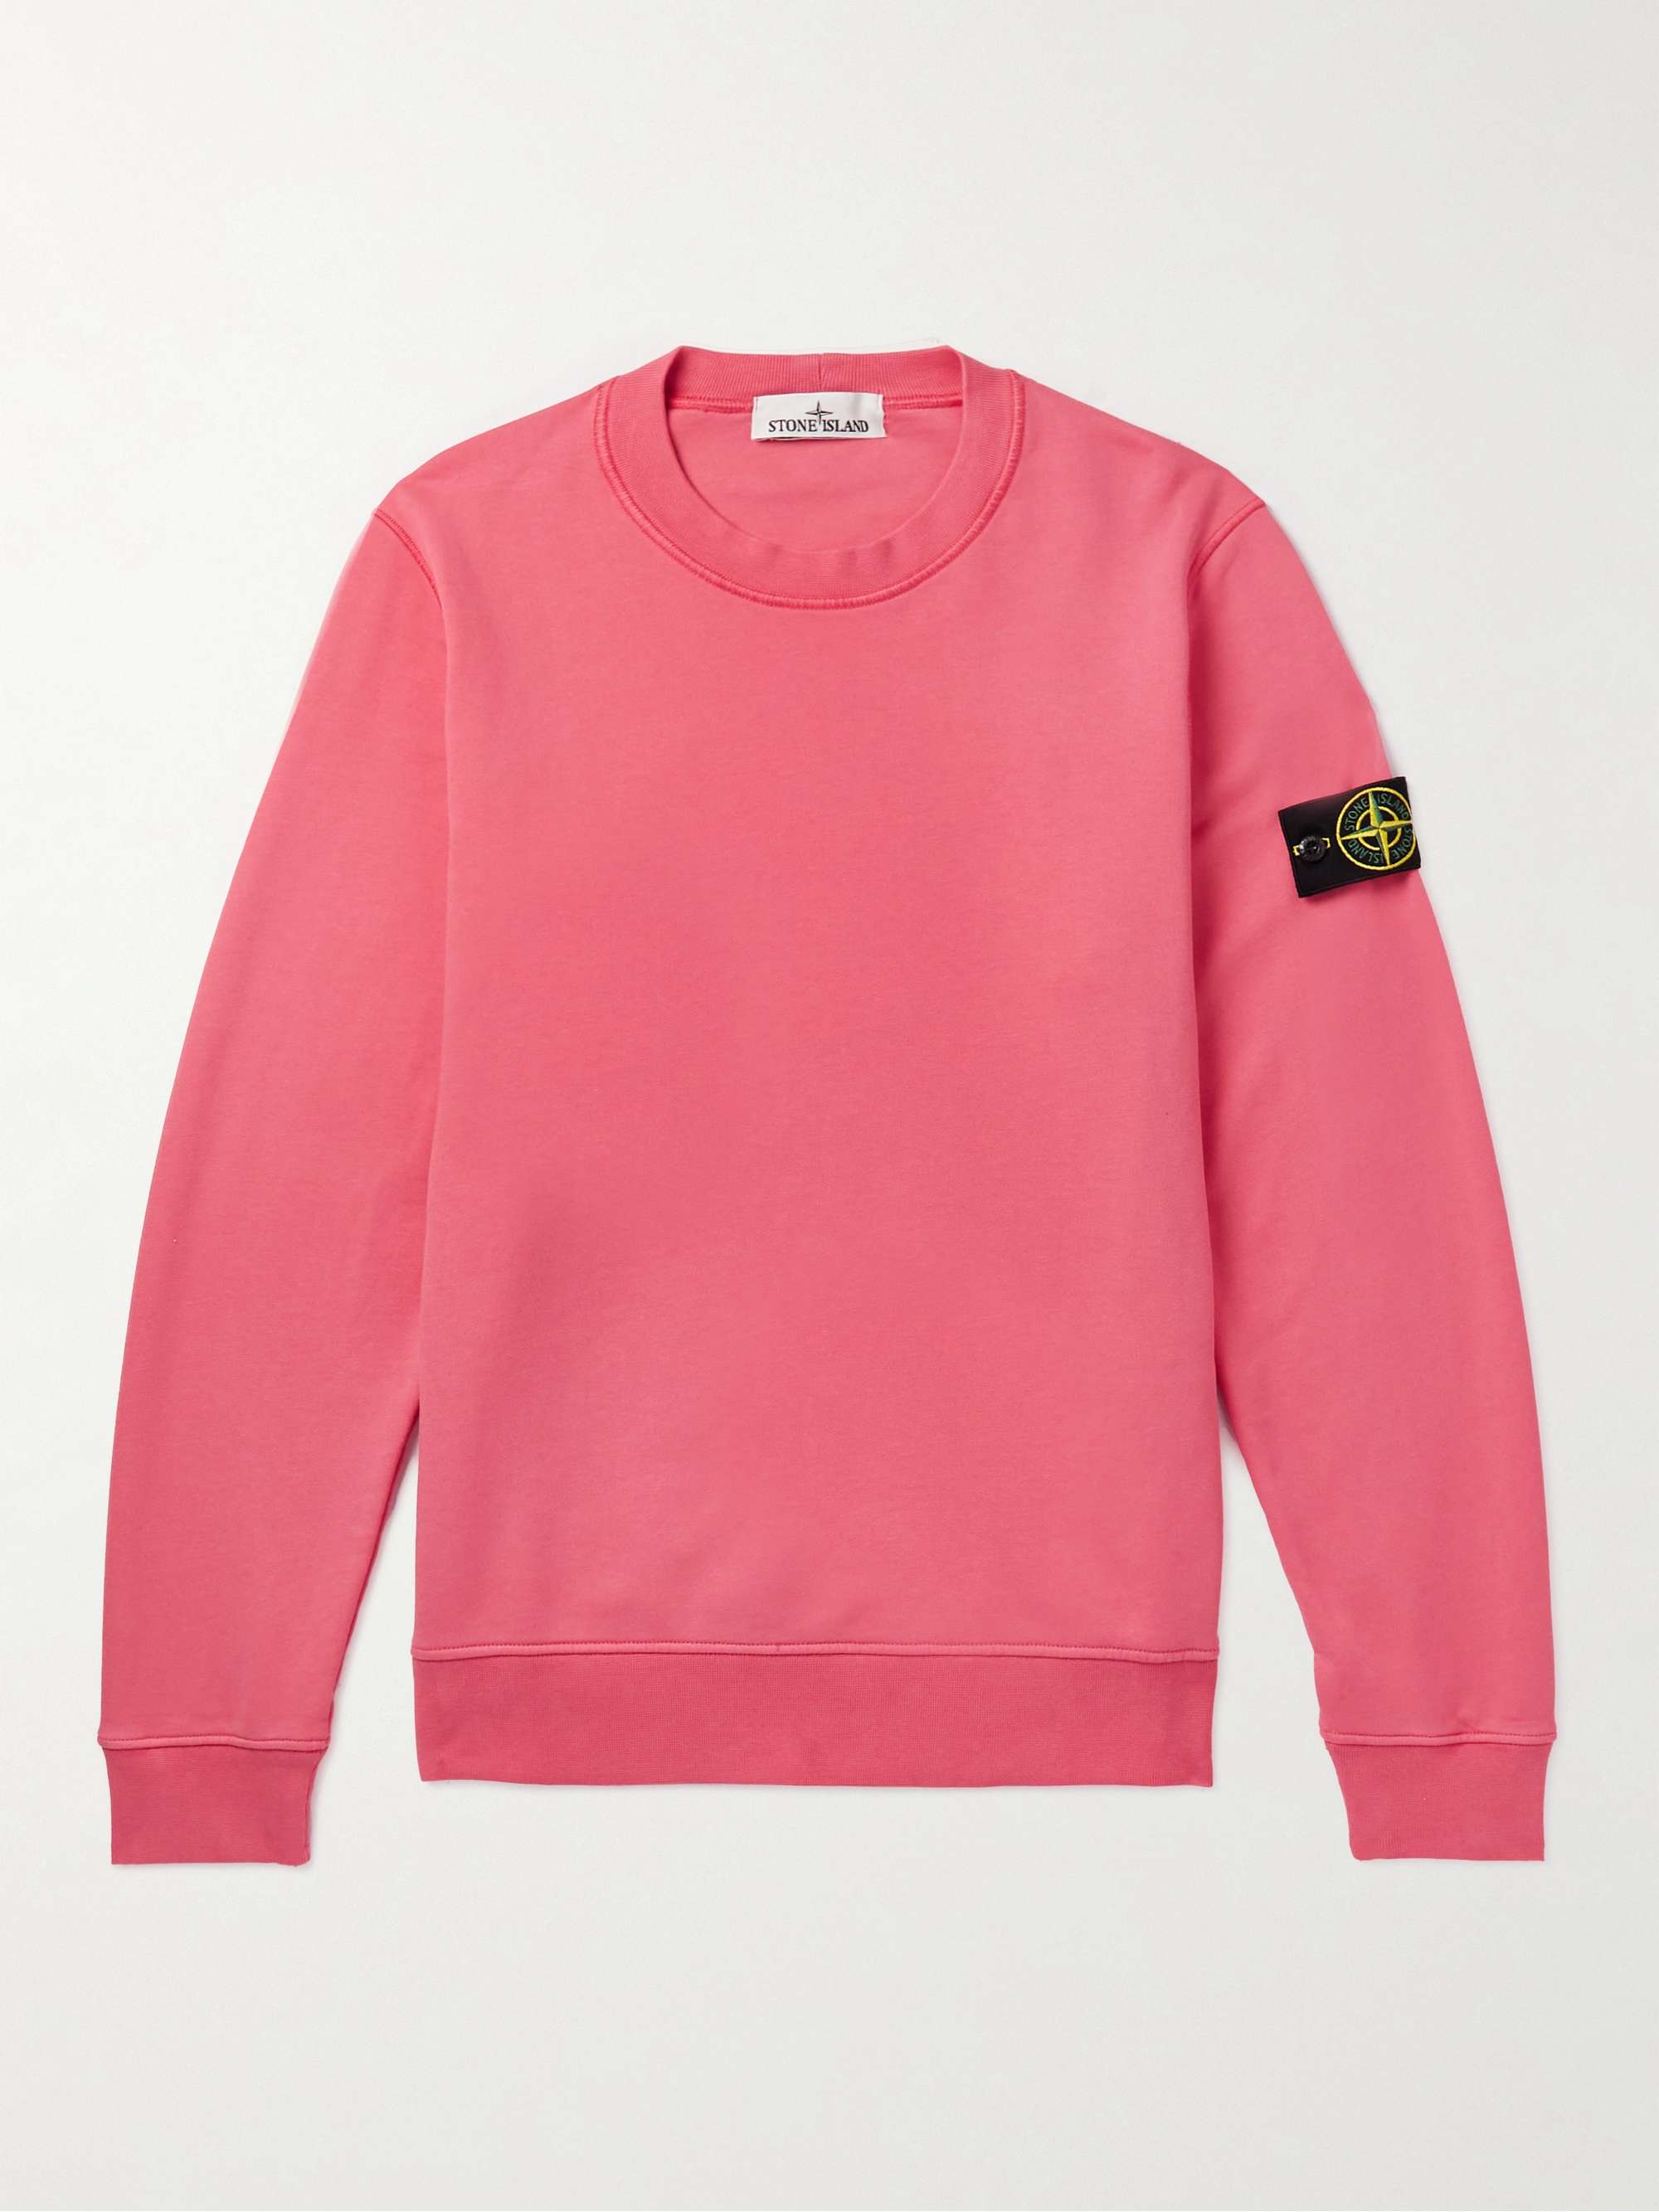 STONE ISLAND Logo-Appliqued Garment-Dyed Cotton-Jersey Sweatshirt,Pink